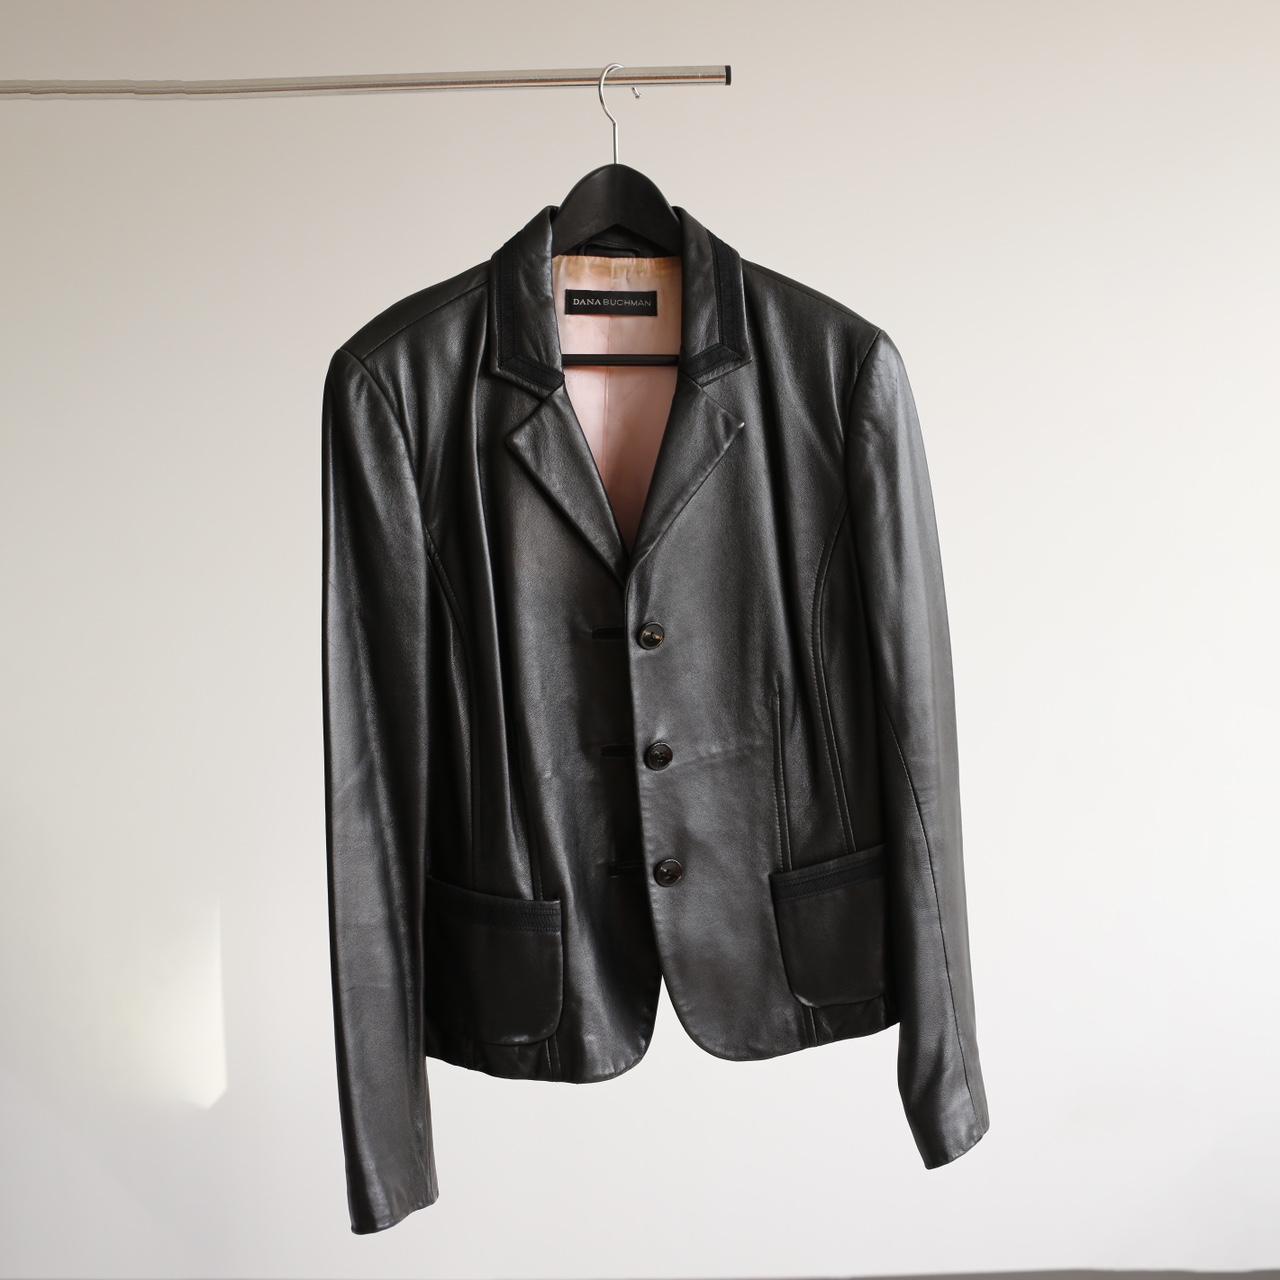 Dana Buchman Jacket - Black Leather Jacket